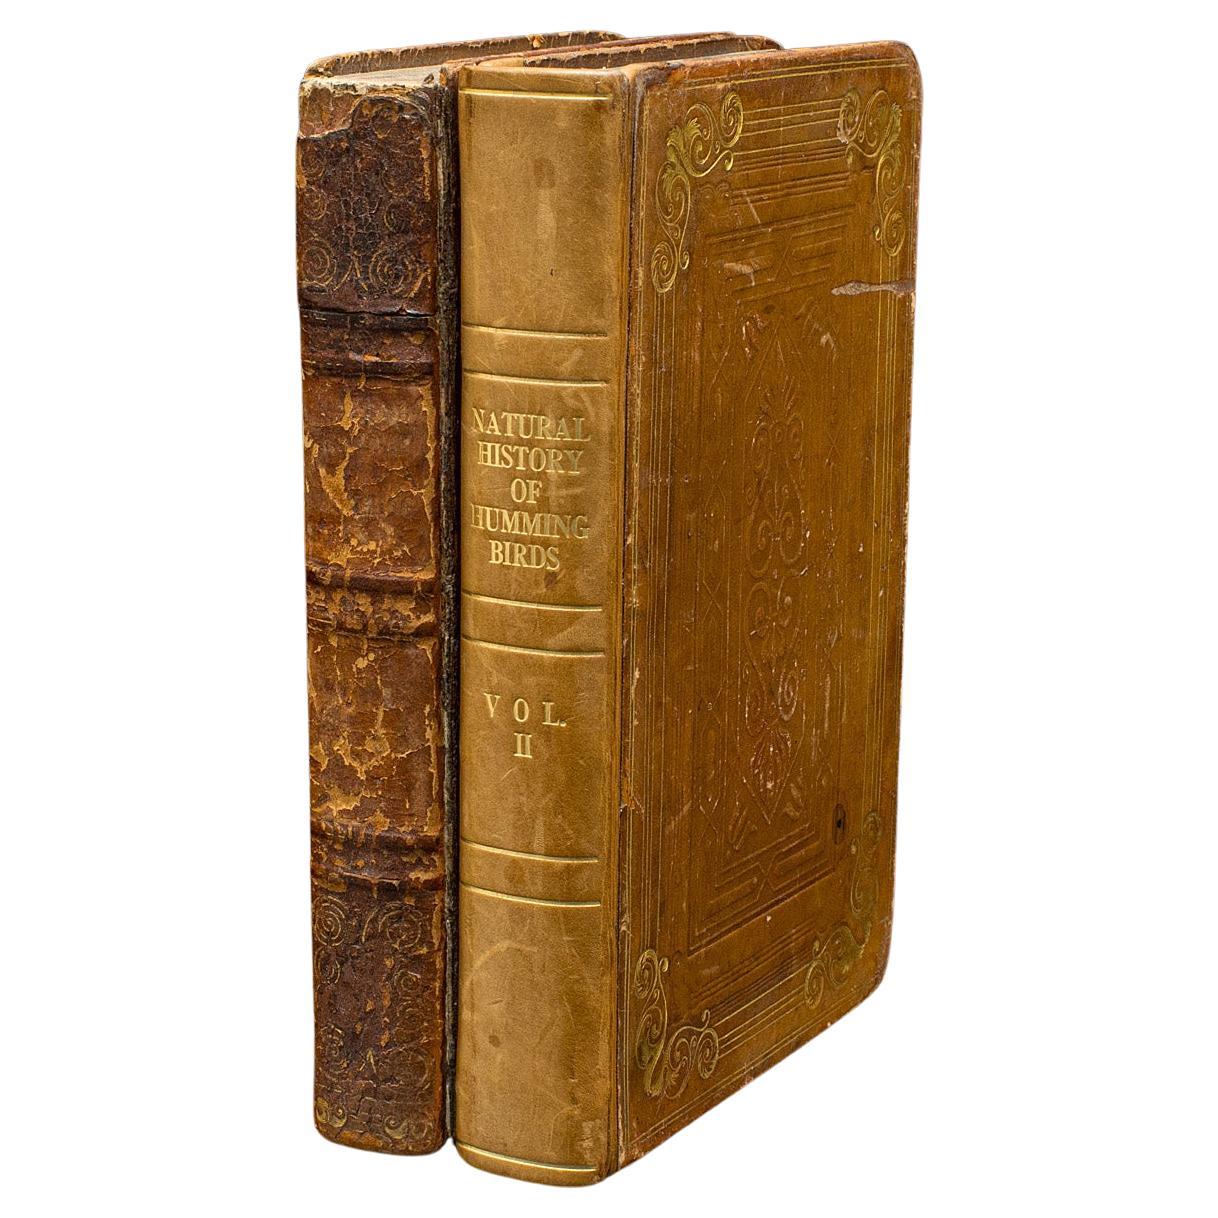 Pair Of Antique Ornithology Books, English, 2 Vols, Hummingbirds, Circa 1830 For Sale